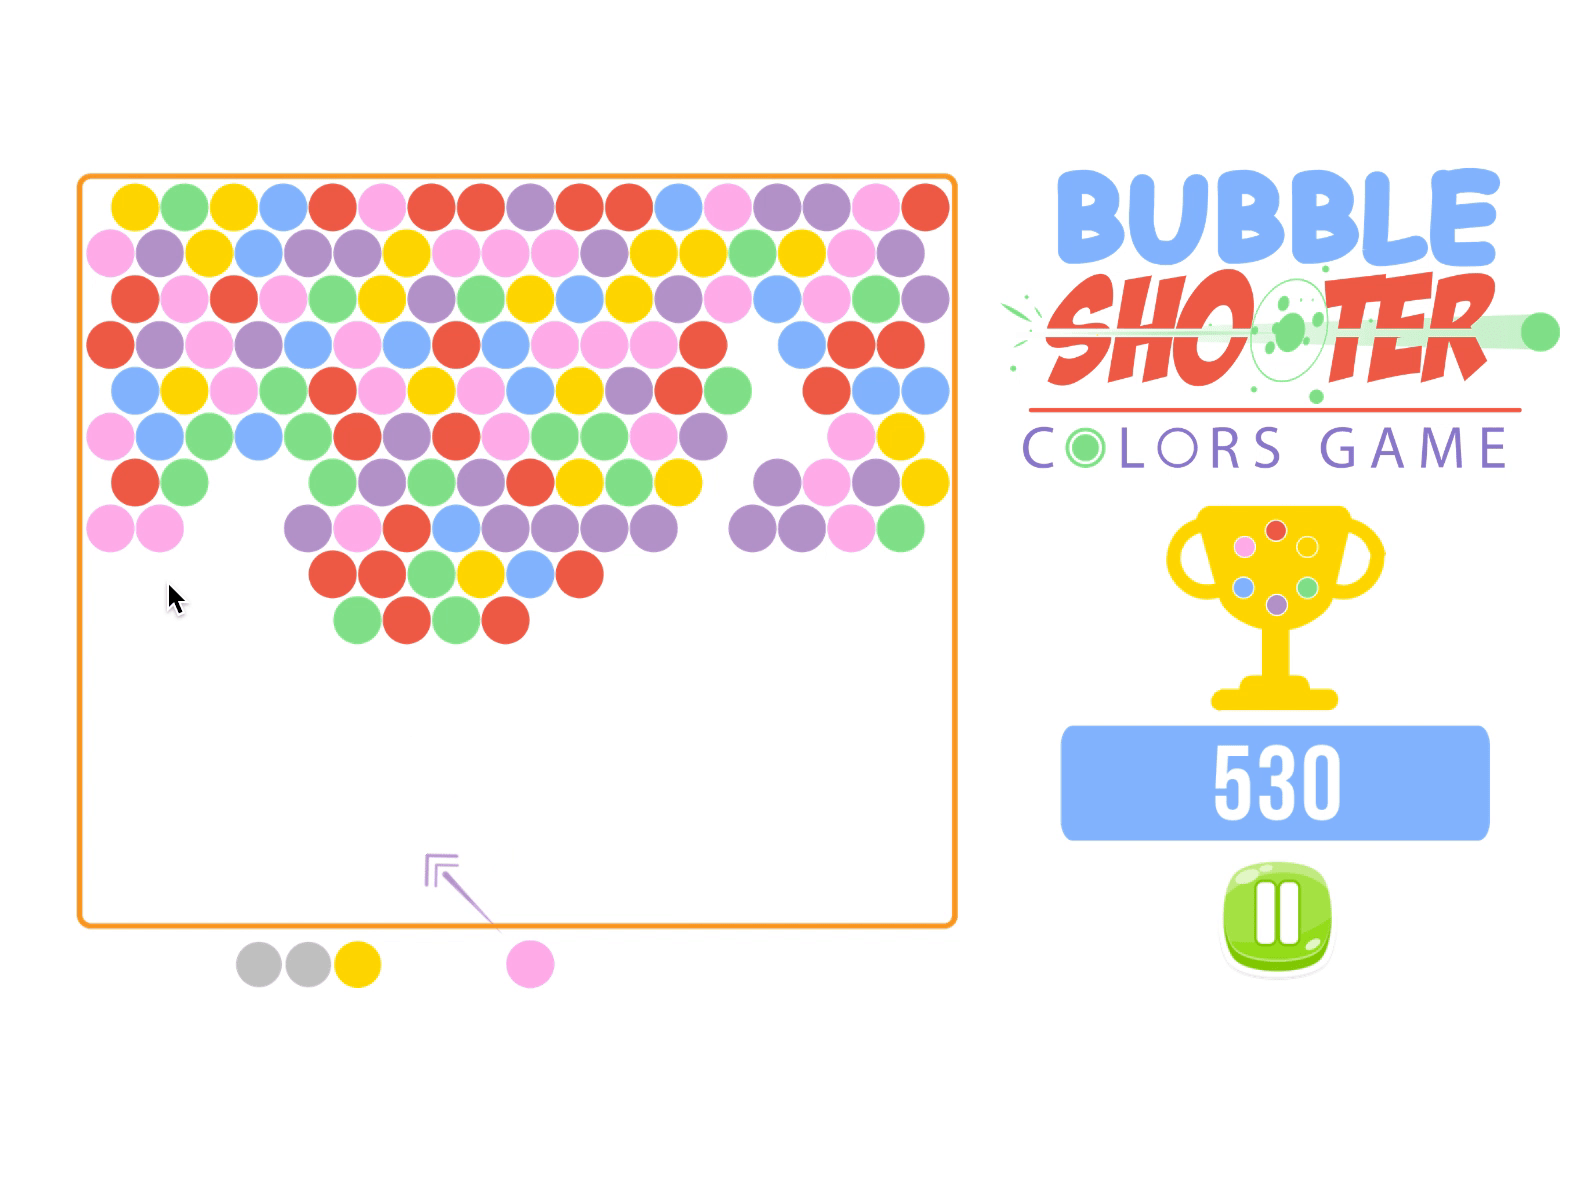 Bubble Shooter Colors Game Screenshot 6